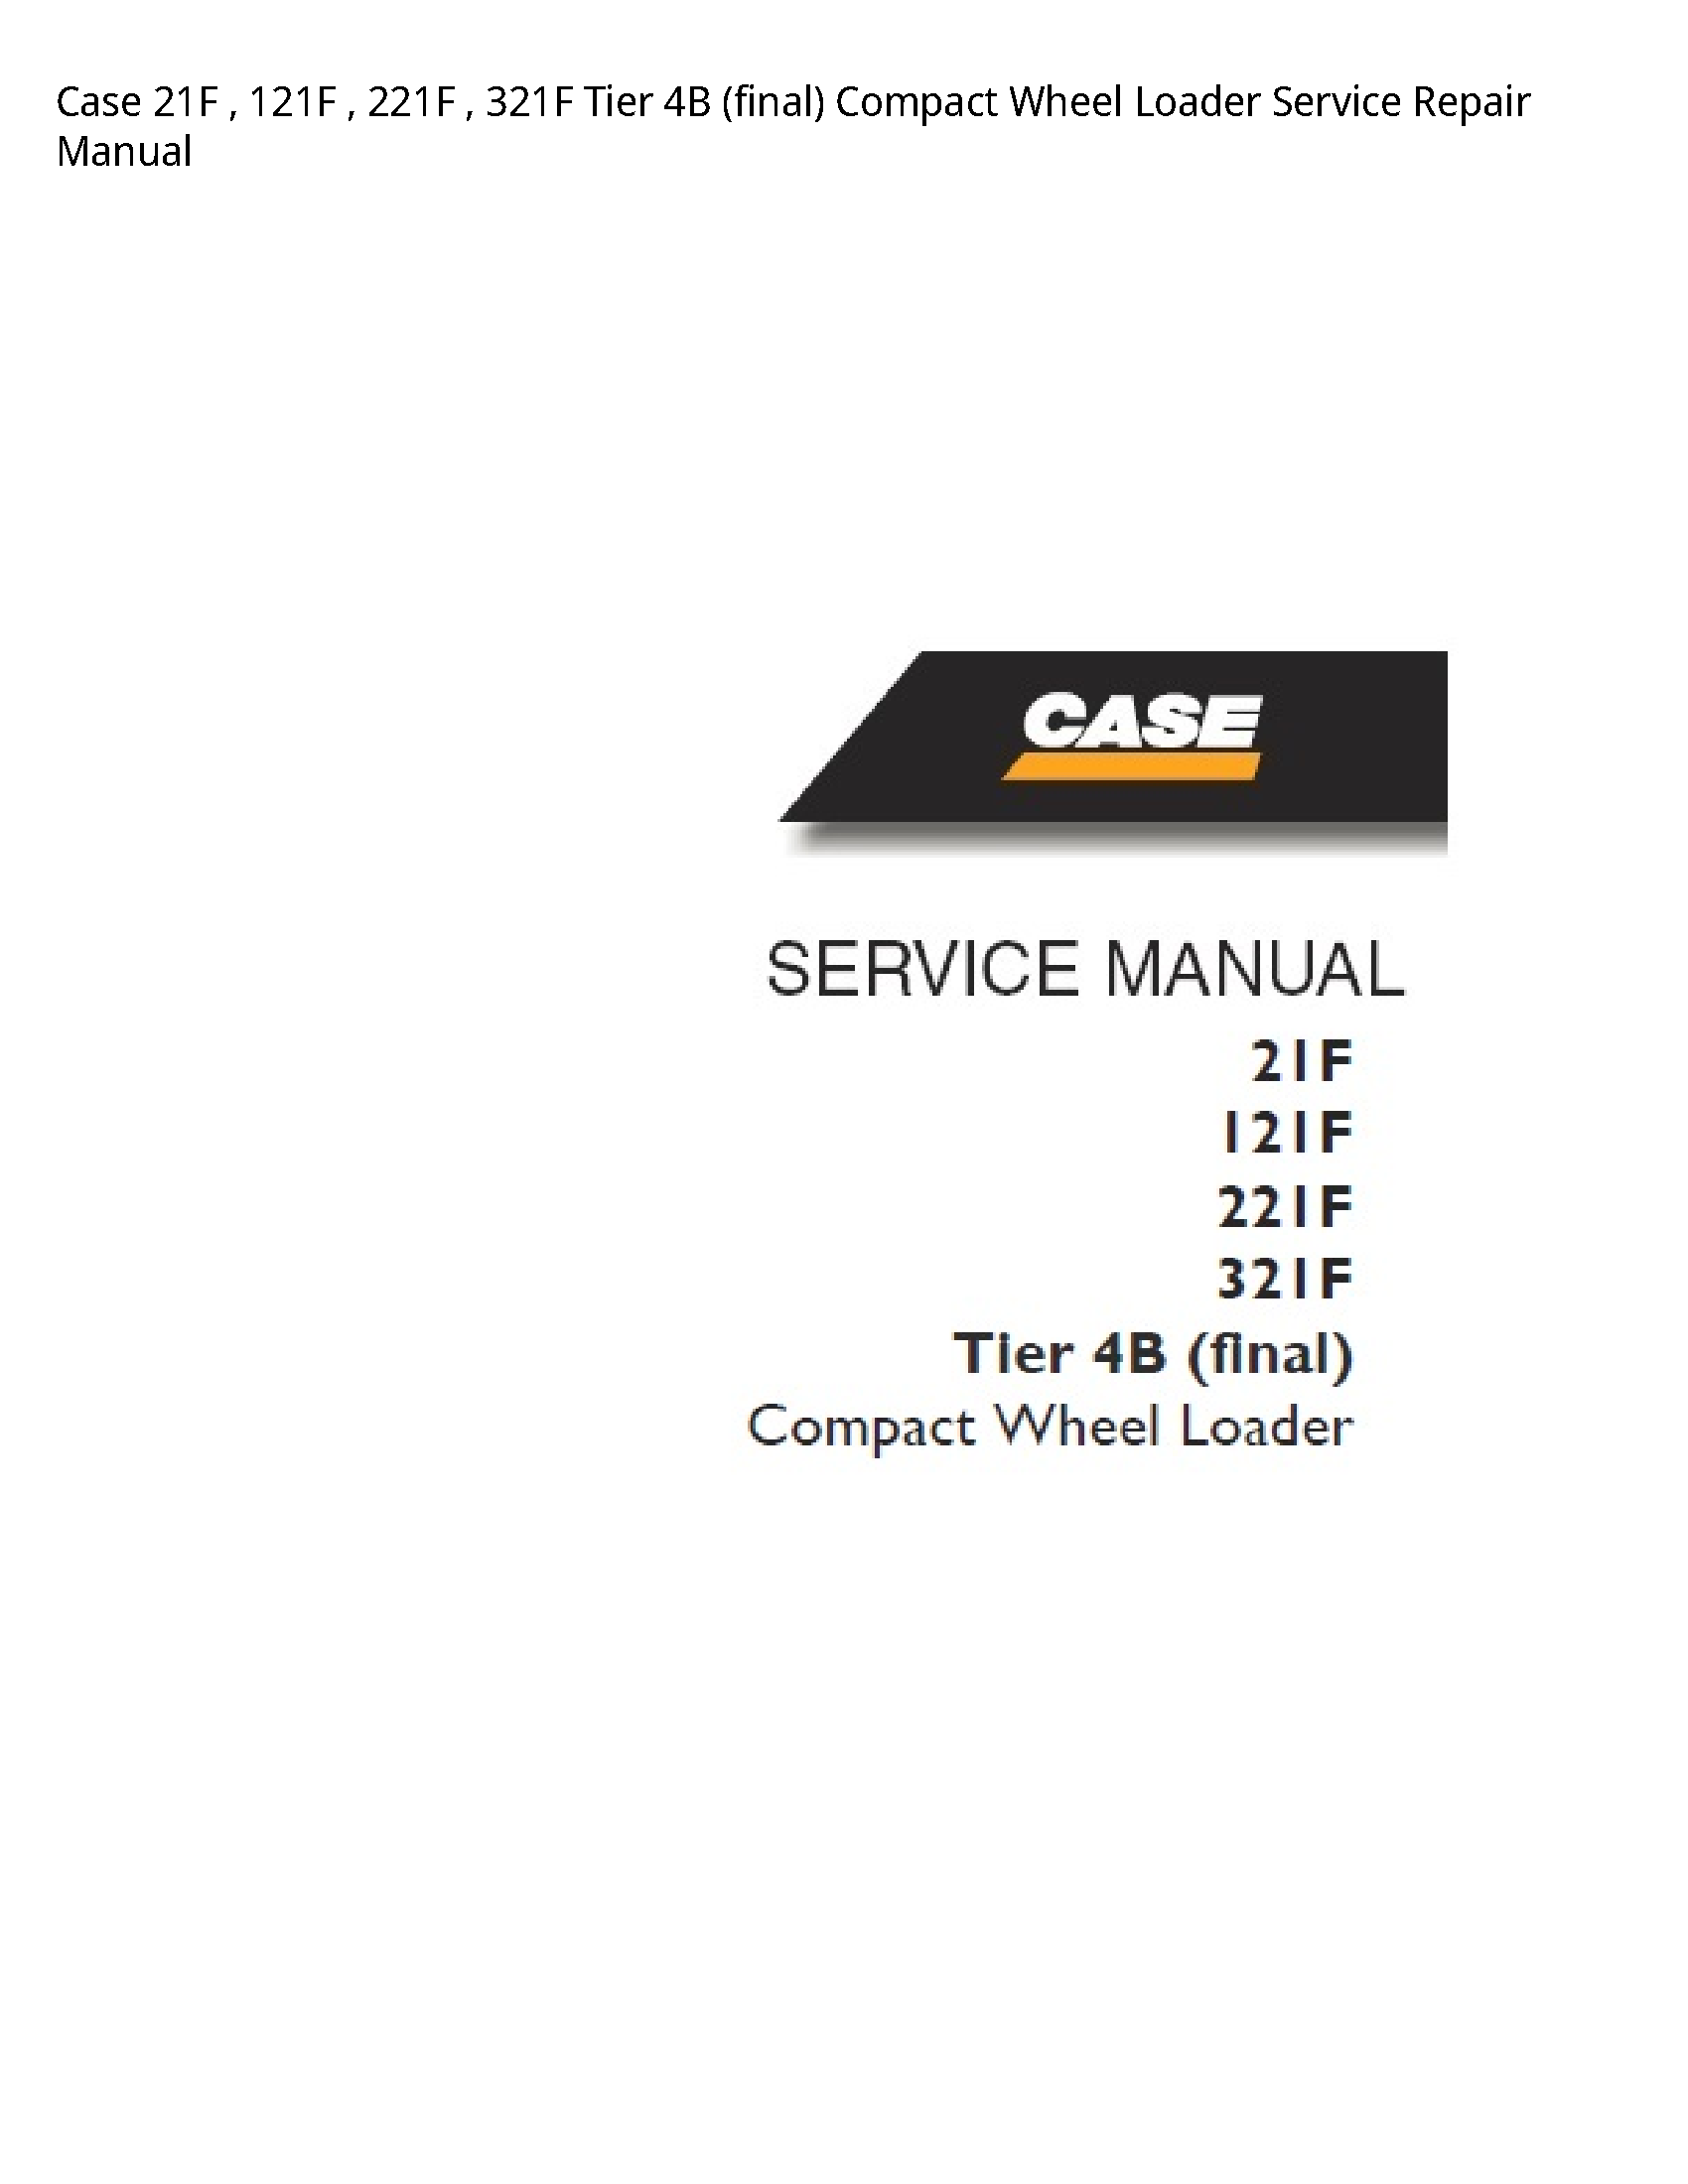 Case/Case IH 21F Tier (final) Compact Wheel Loader manual